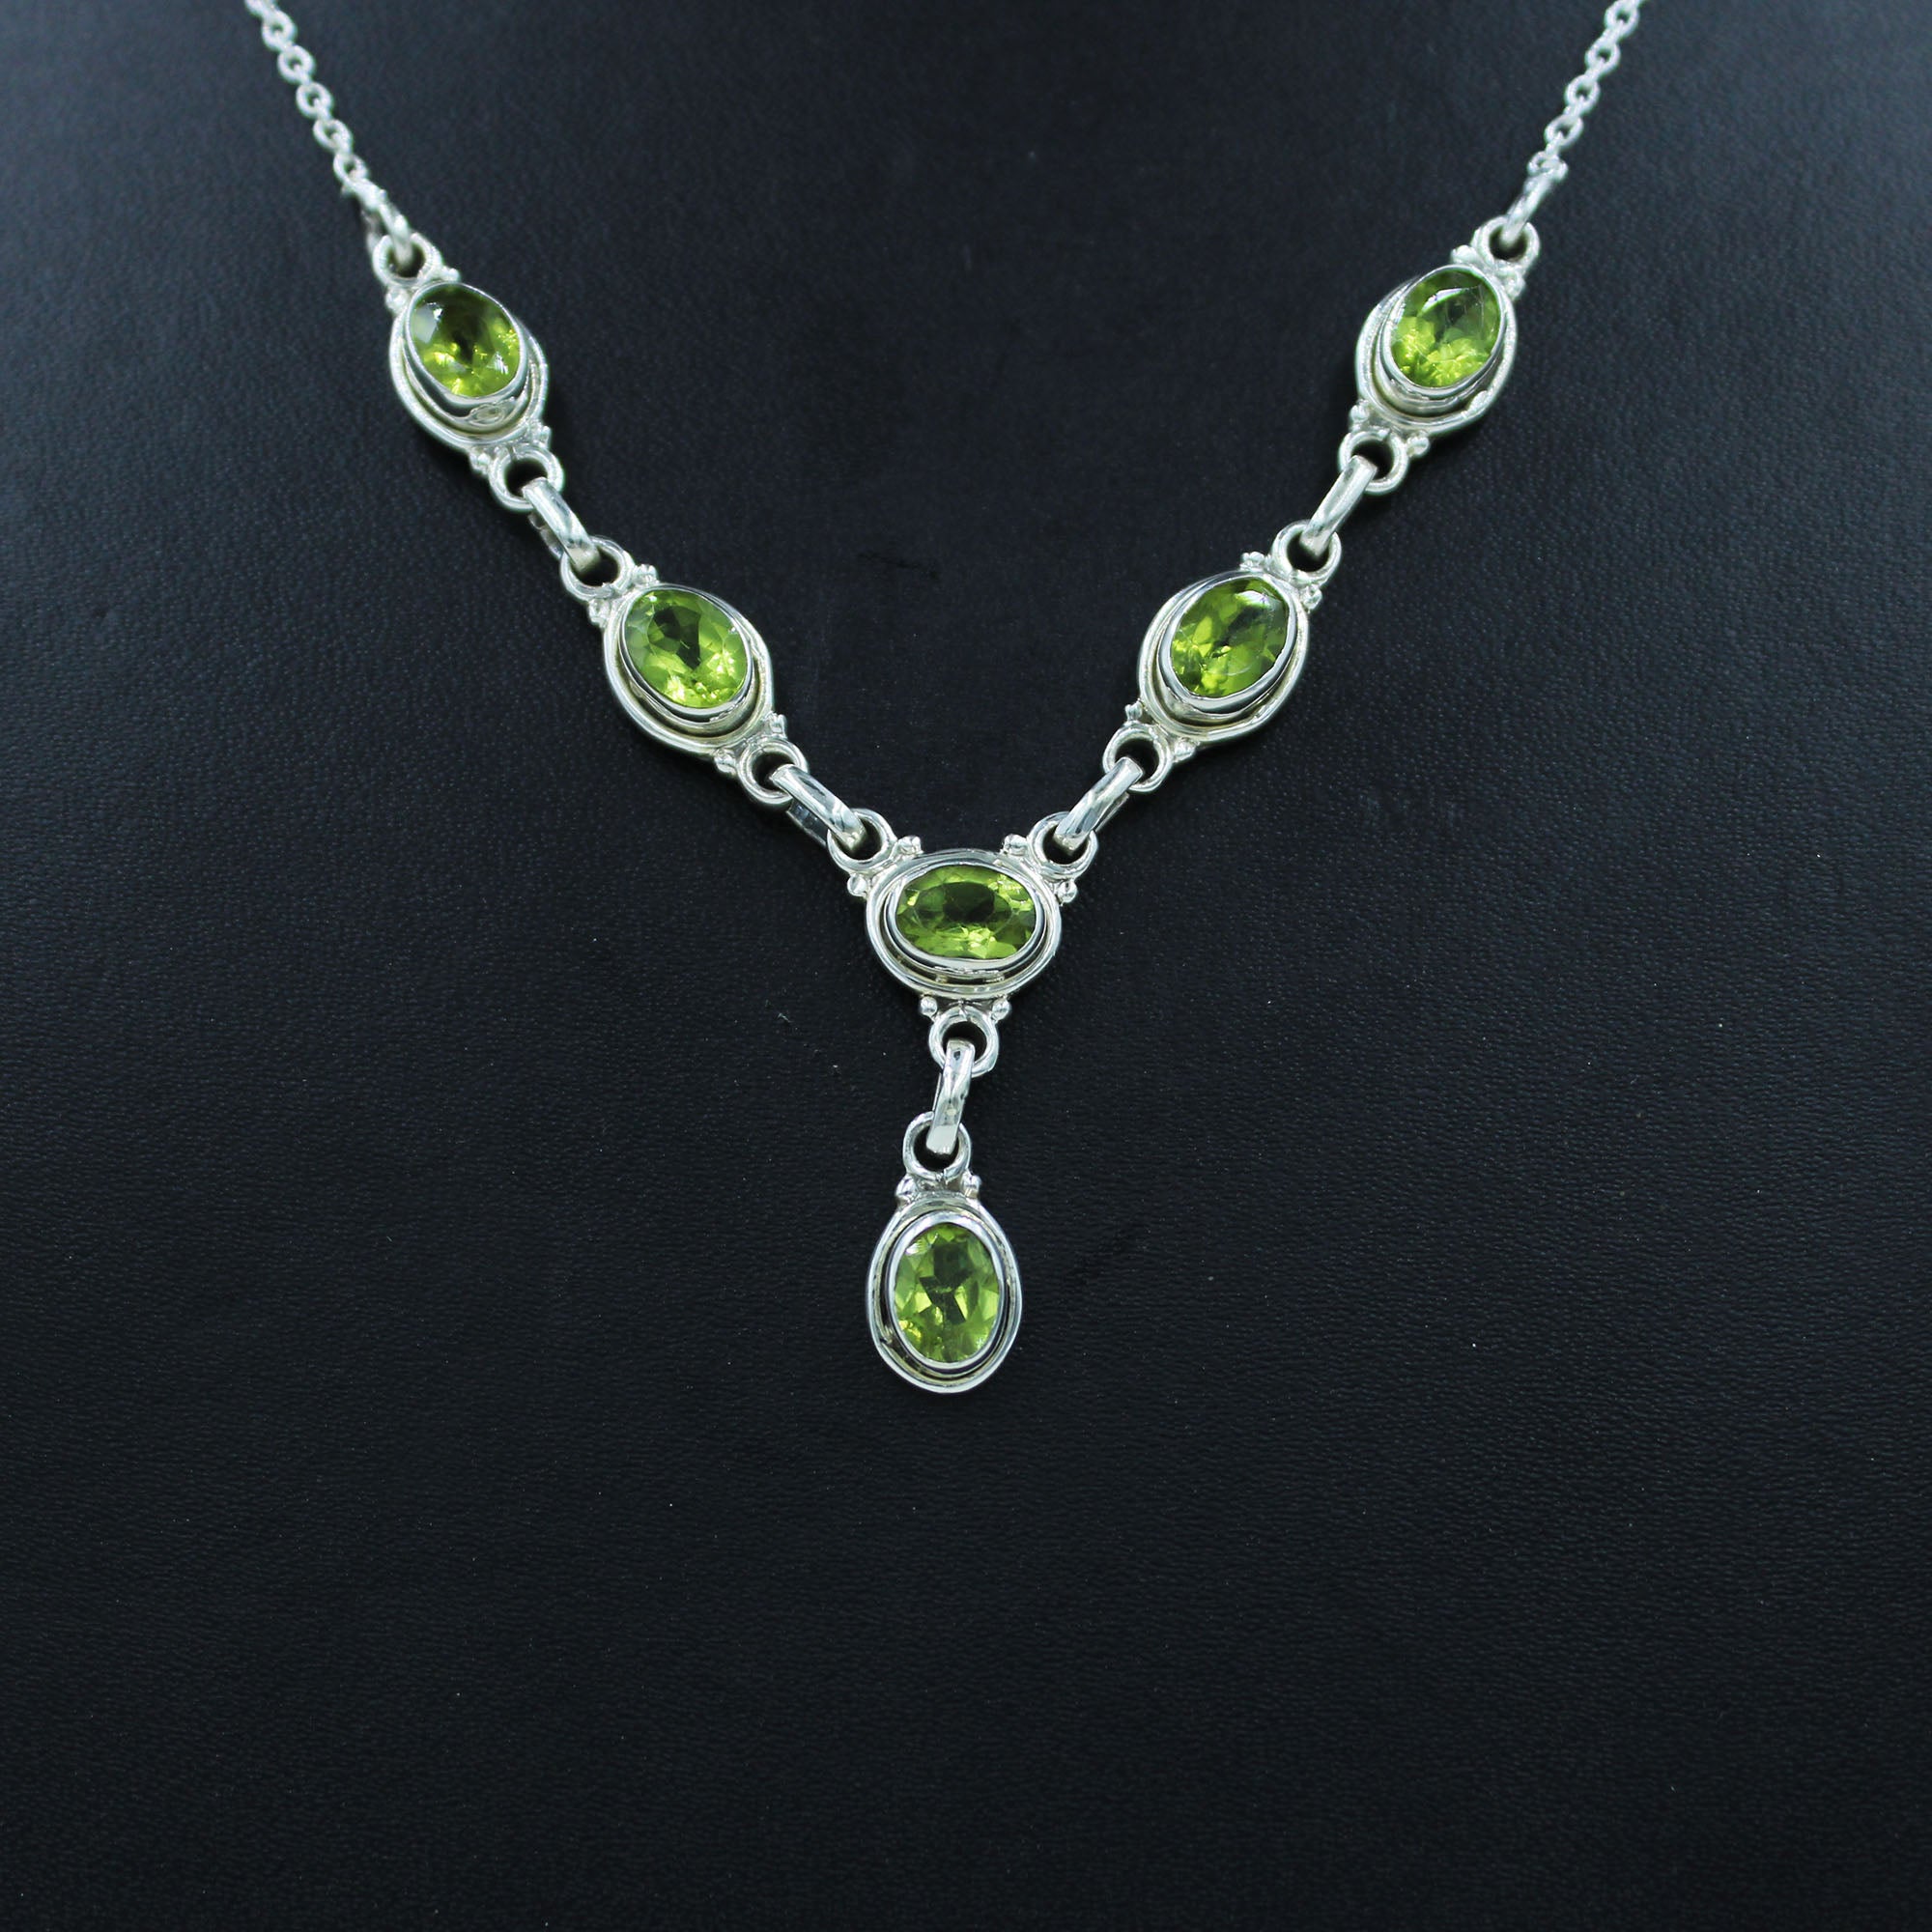 Buy Designer Peridot Necklace Online - Best Gift for Mom